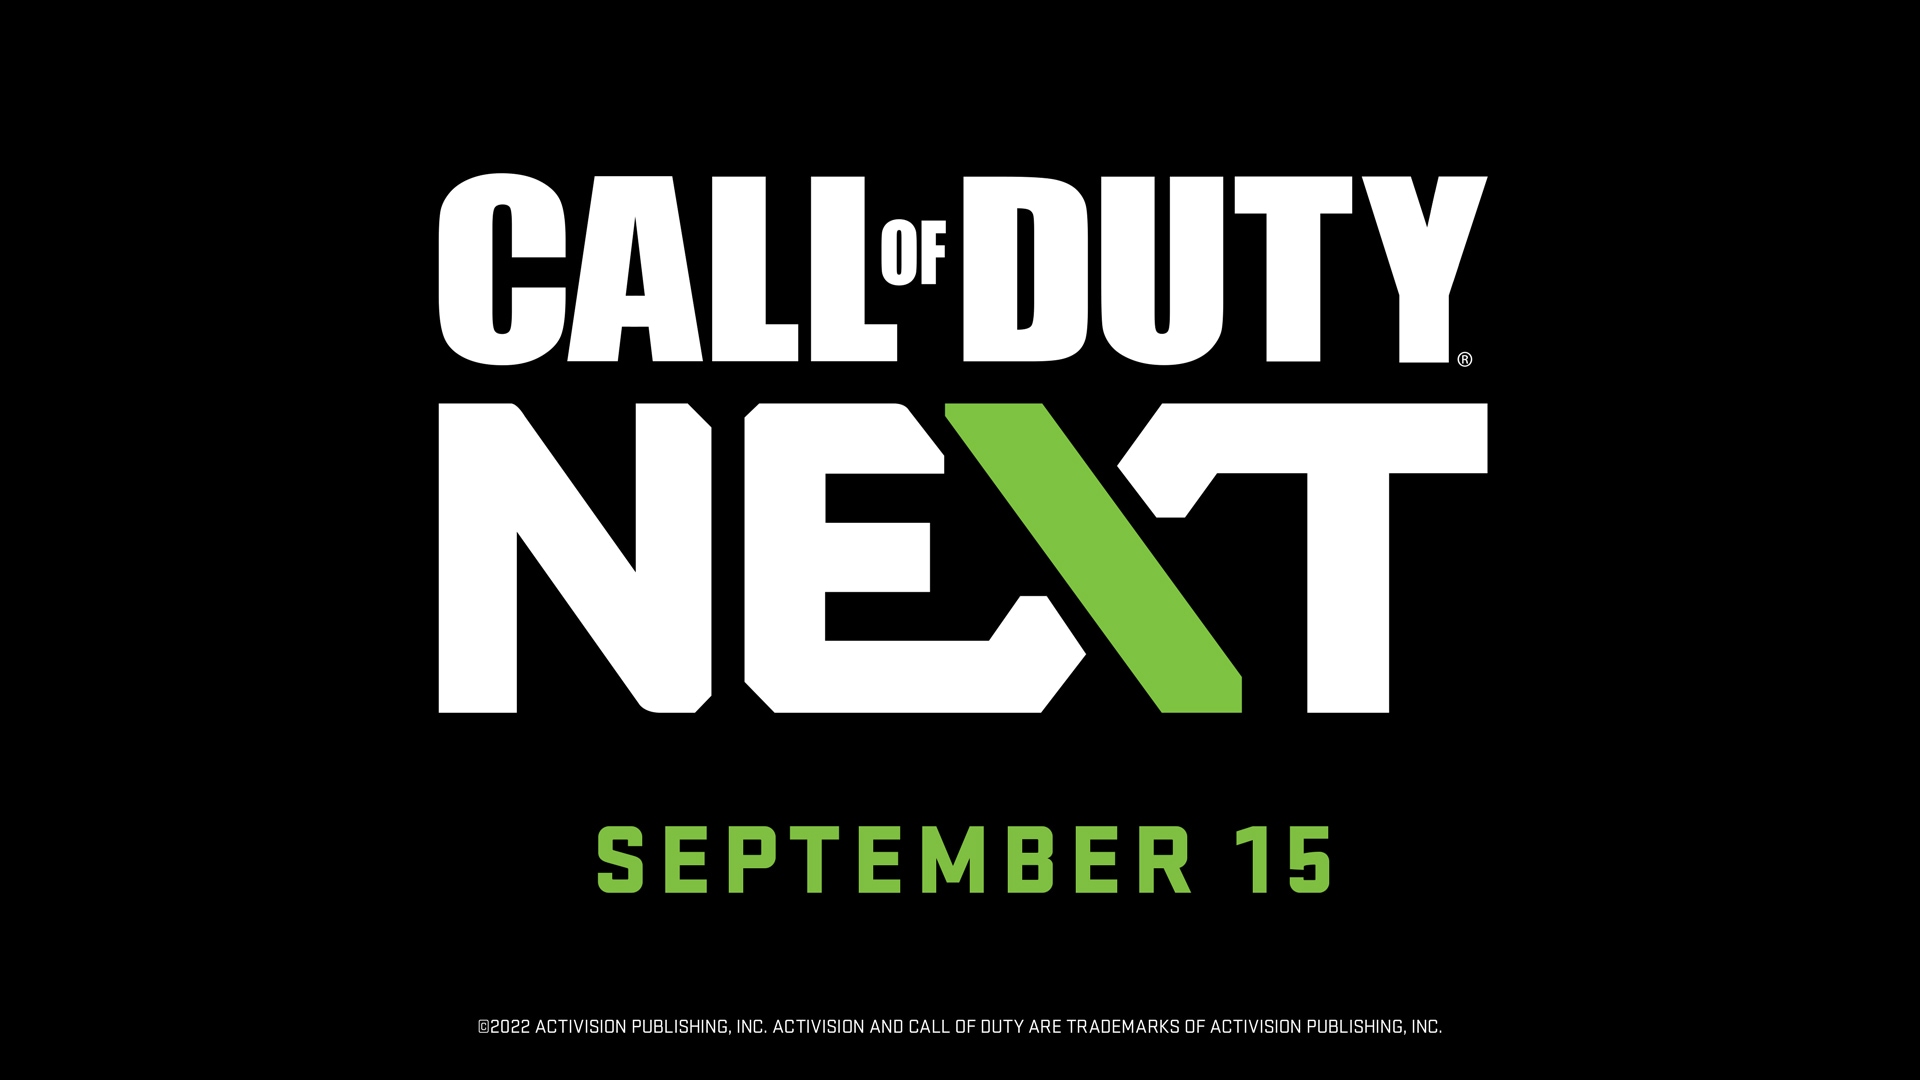 Call of Duty: Modern Warfare 2 Beta Codes to Drop Next Week